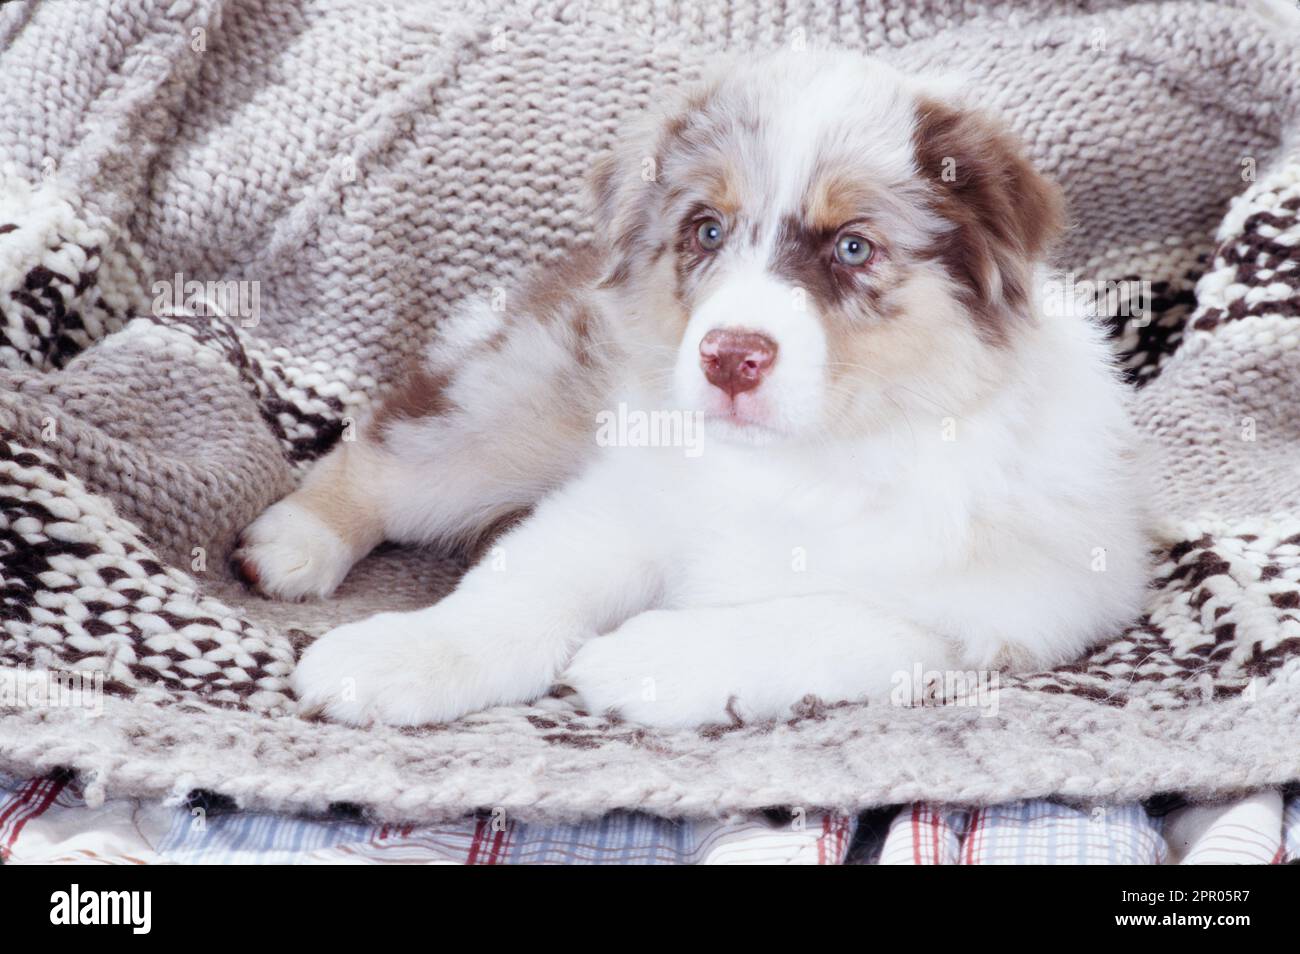 Australian Shepherd puppy sitting on woven blanket Stock Photo